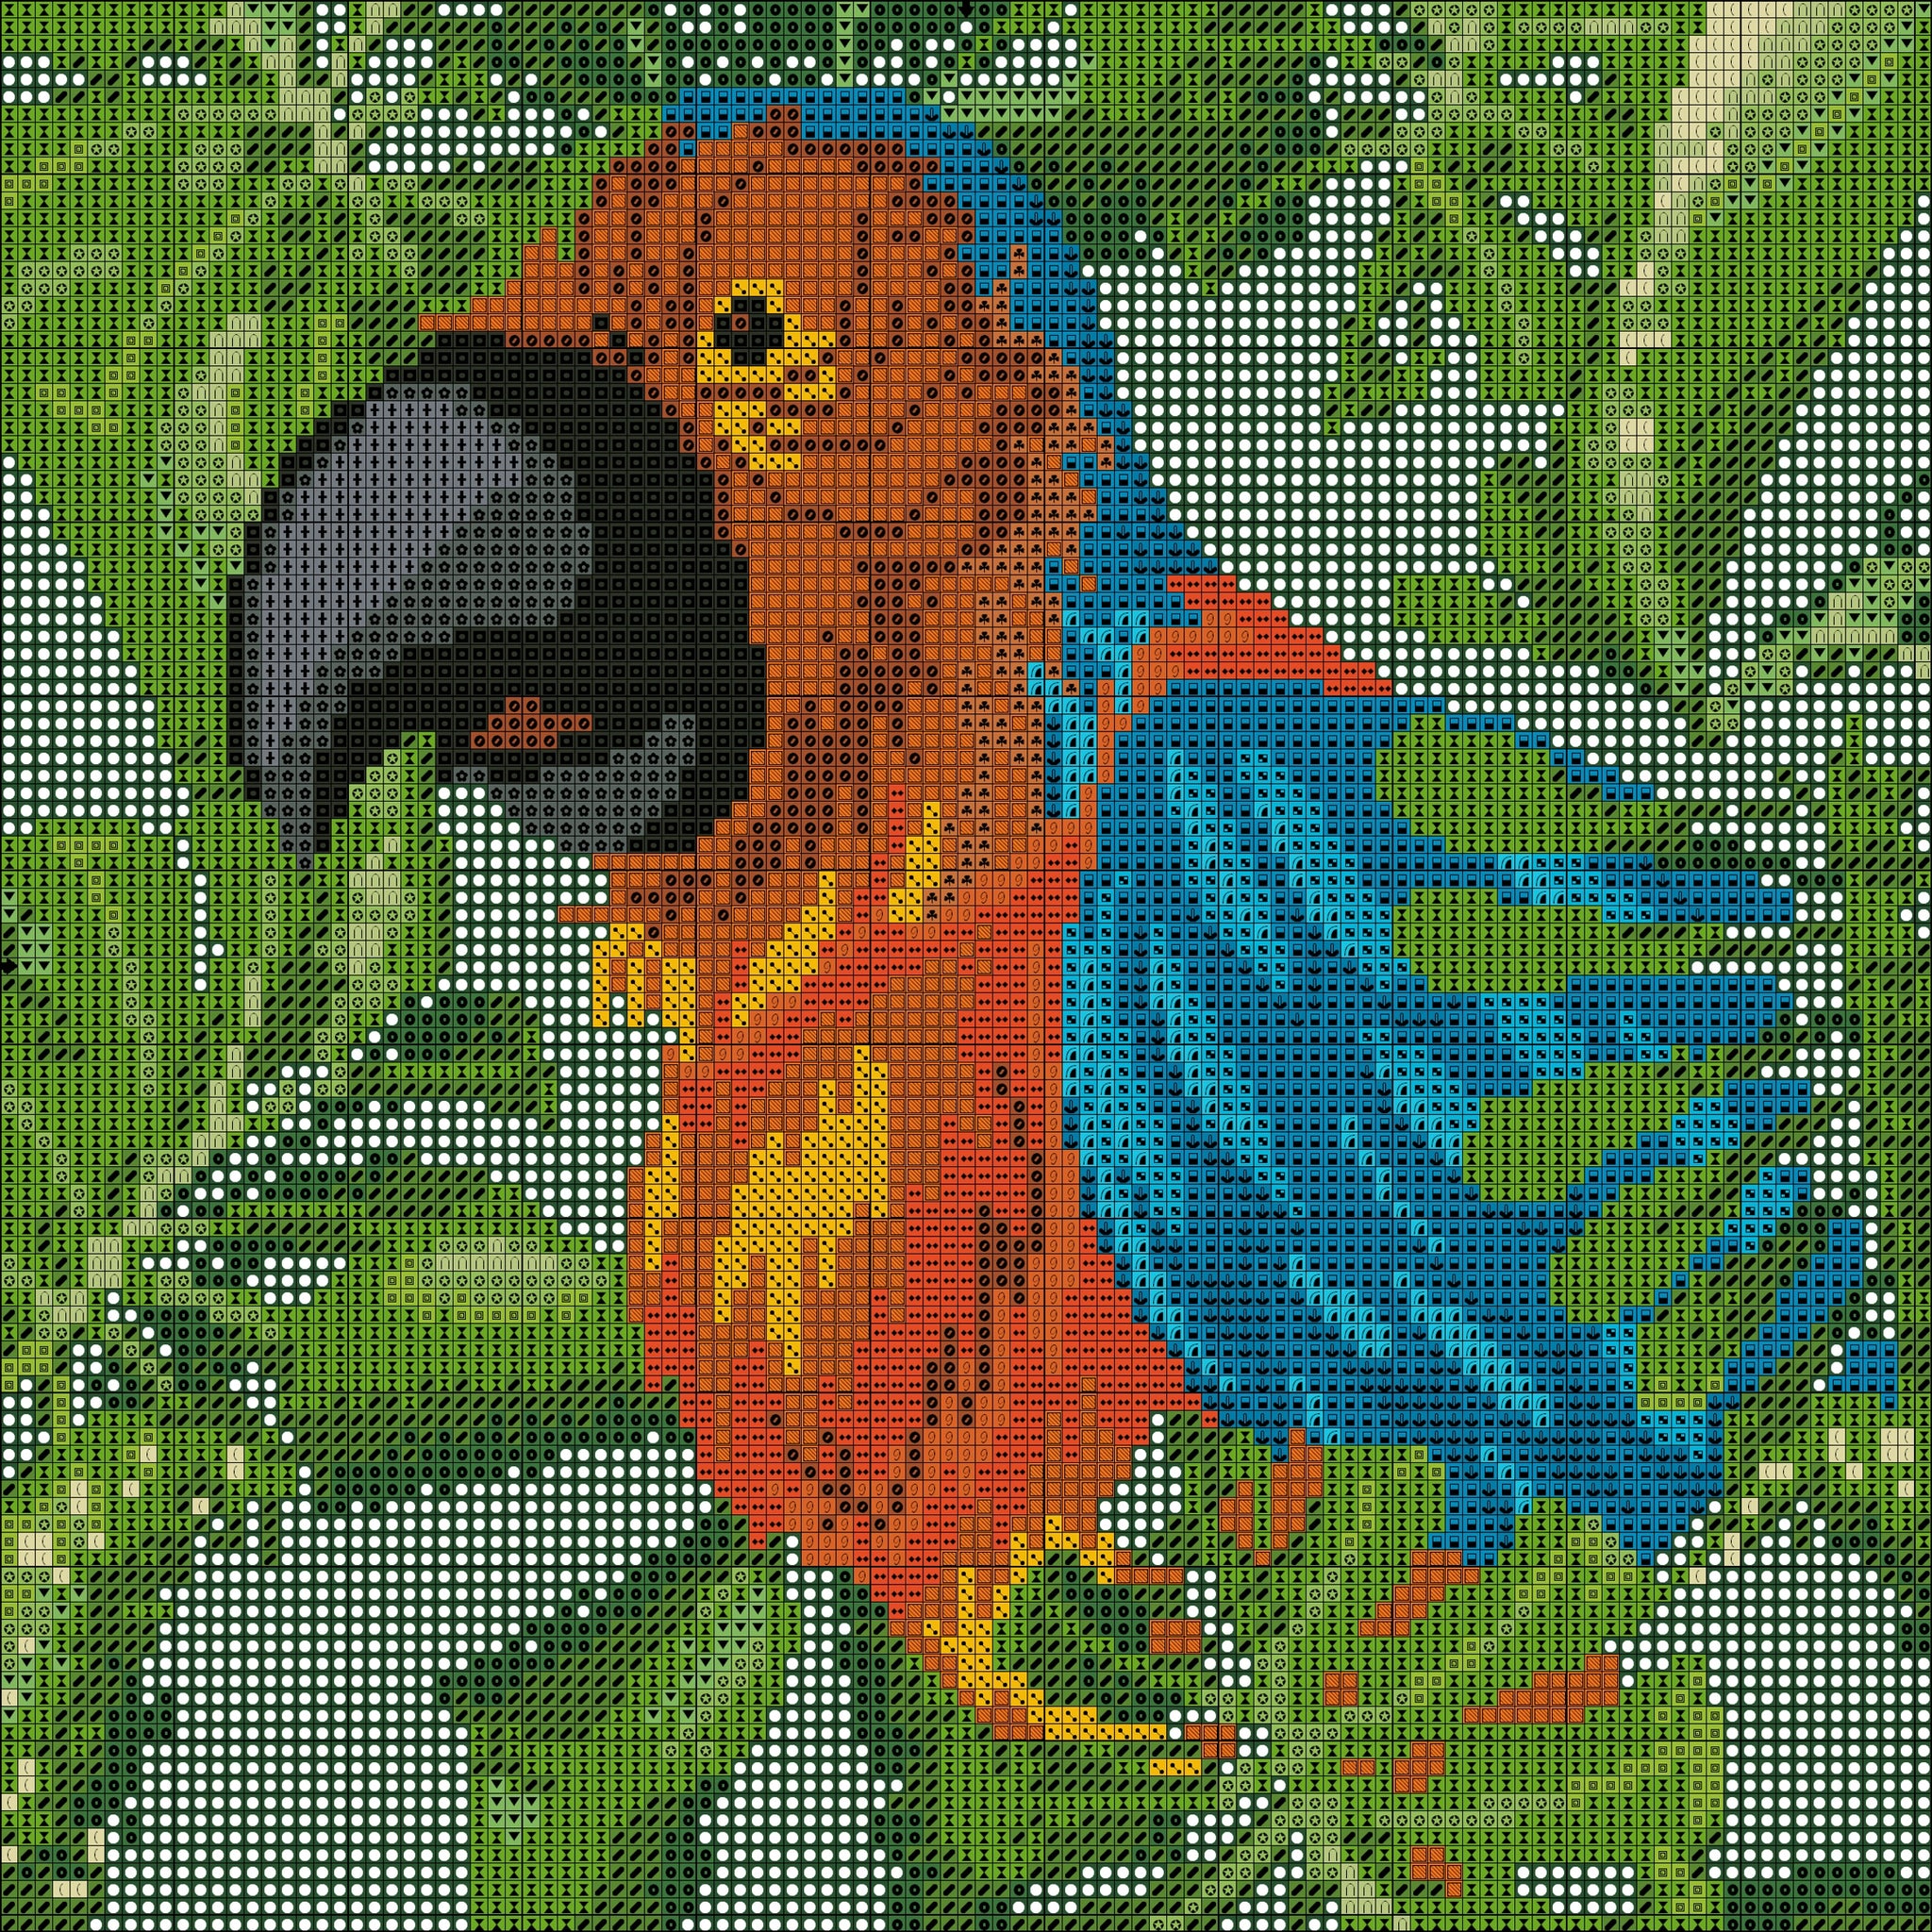 Cute green parrot free bird animals cross stitch embroidery design